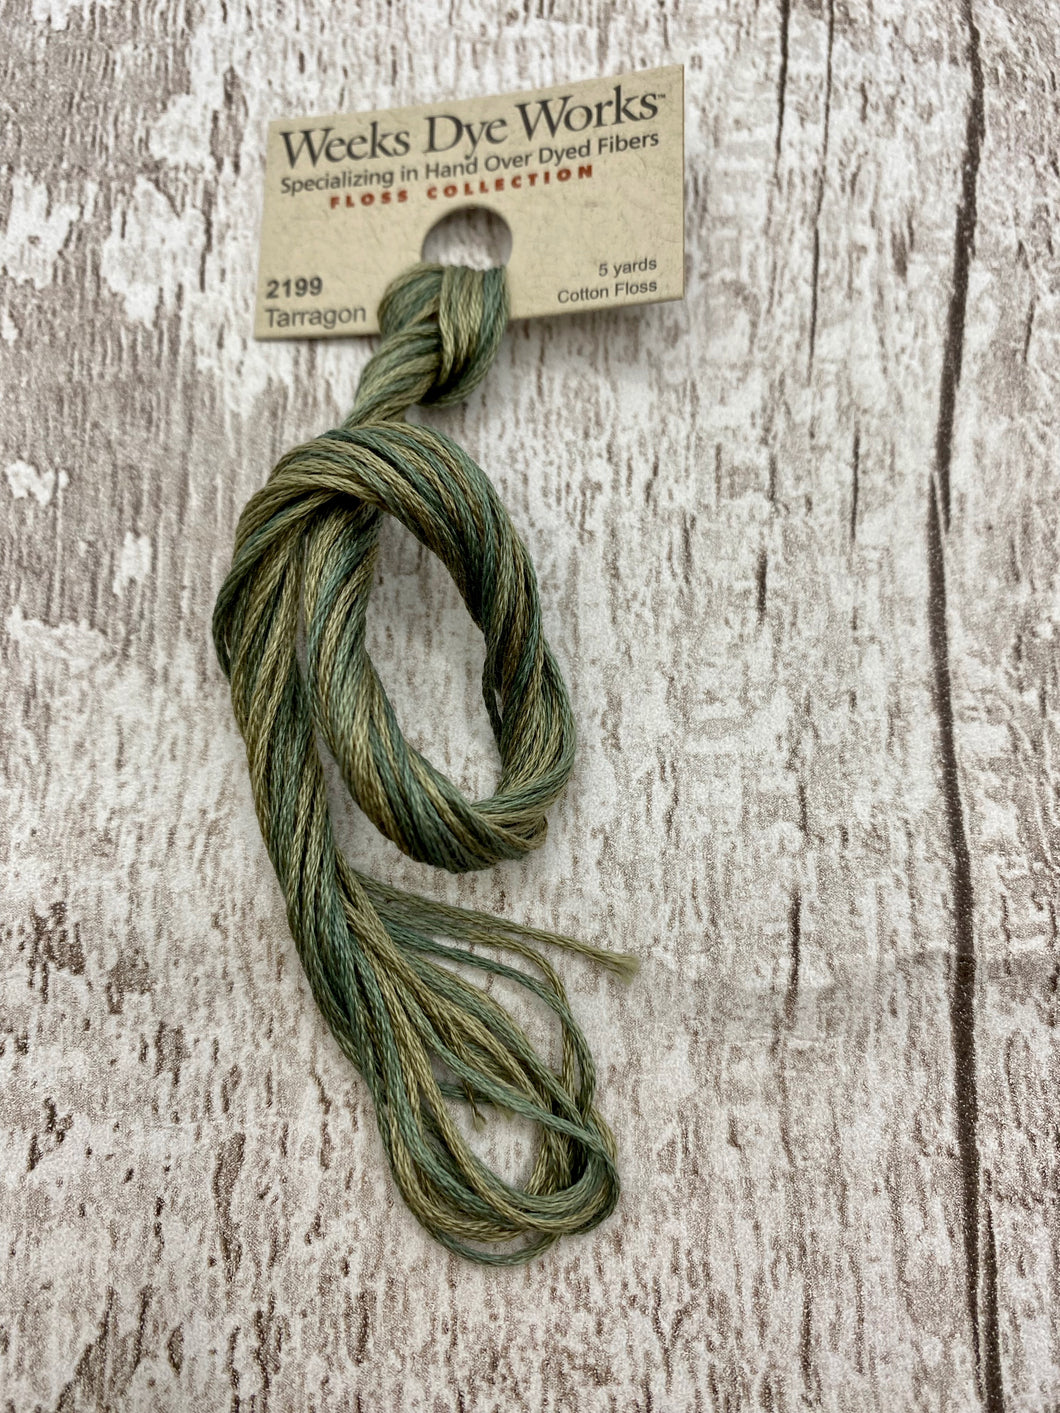 Tarragon (#2199) Weeks Dye Works, 6-strand cotton floss